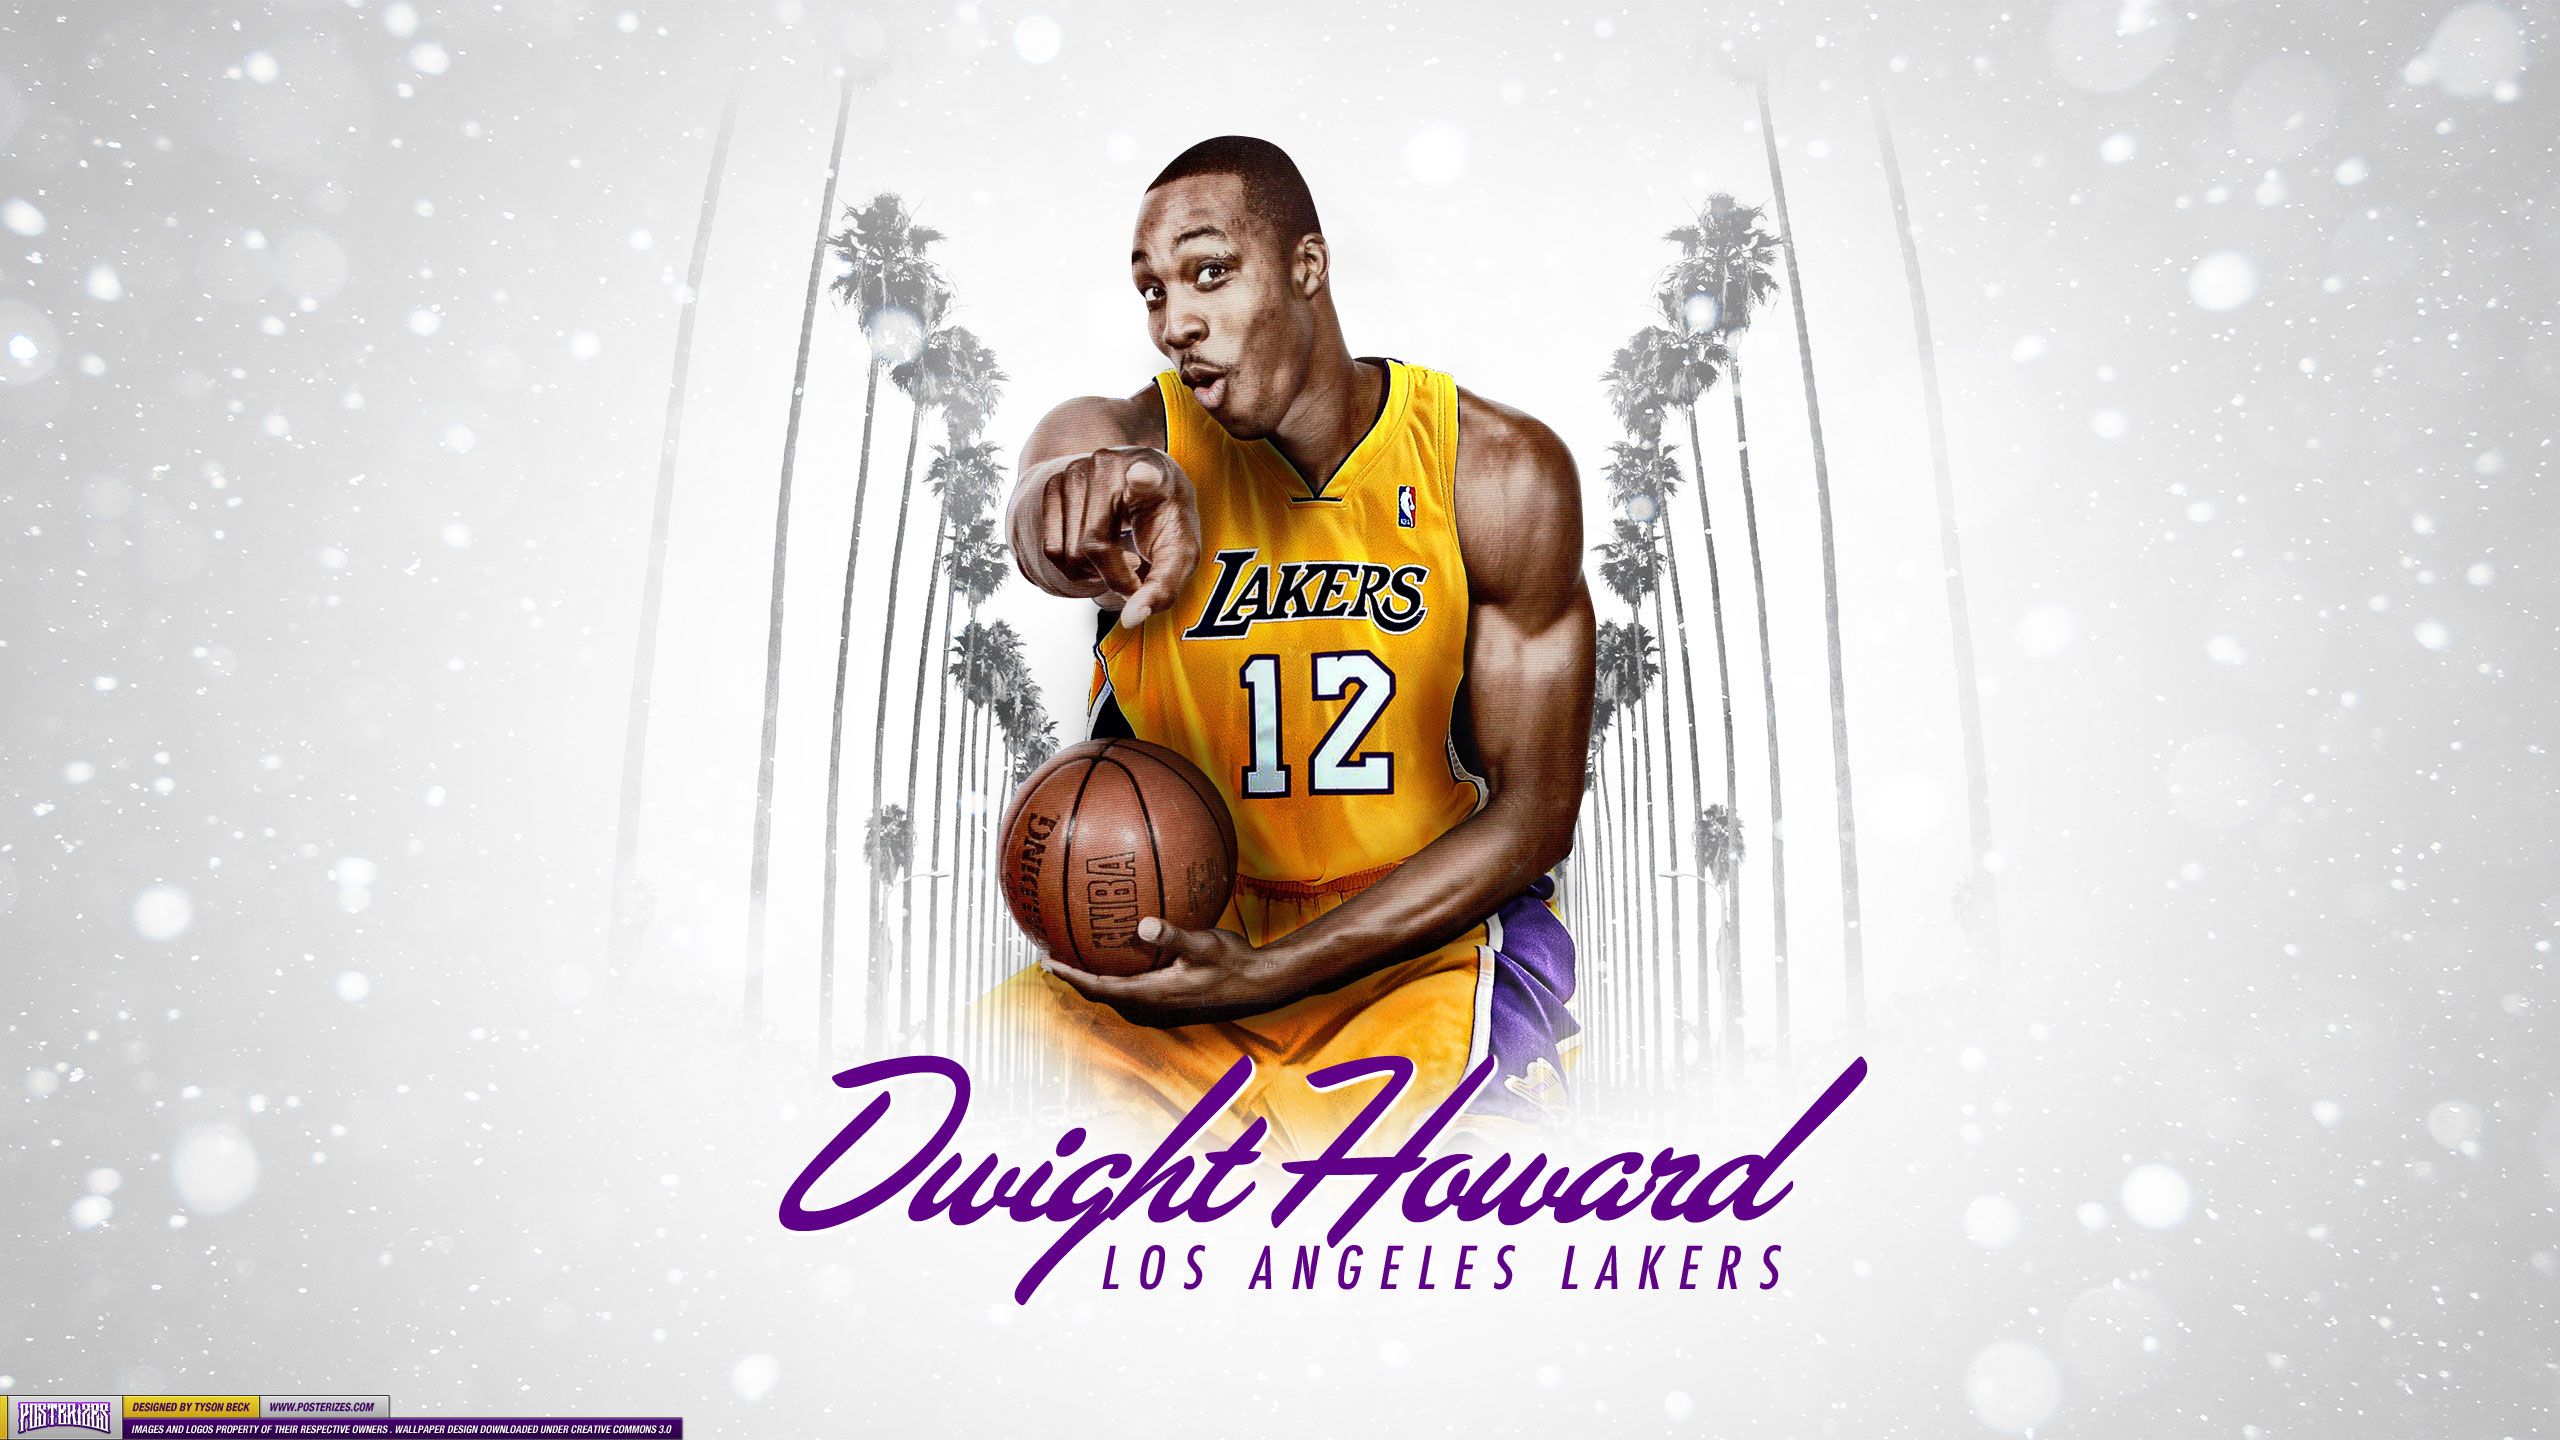 Los Angeles Lakers Wallpapers | Basketball Wallpapers at ...